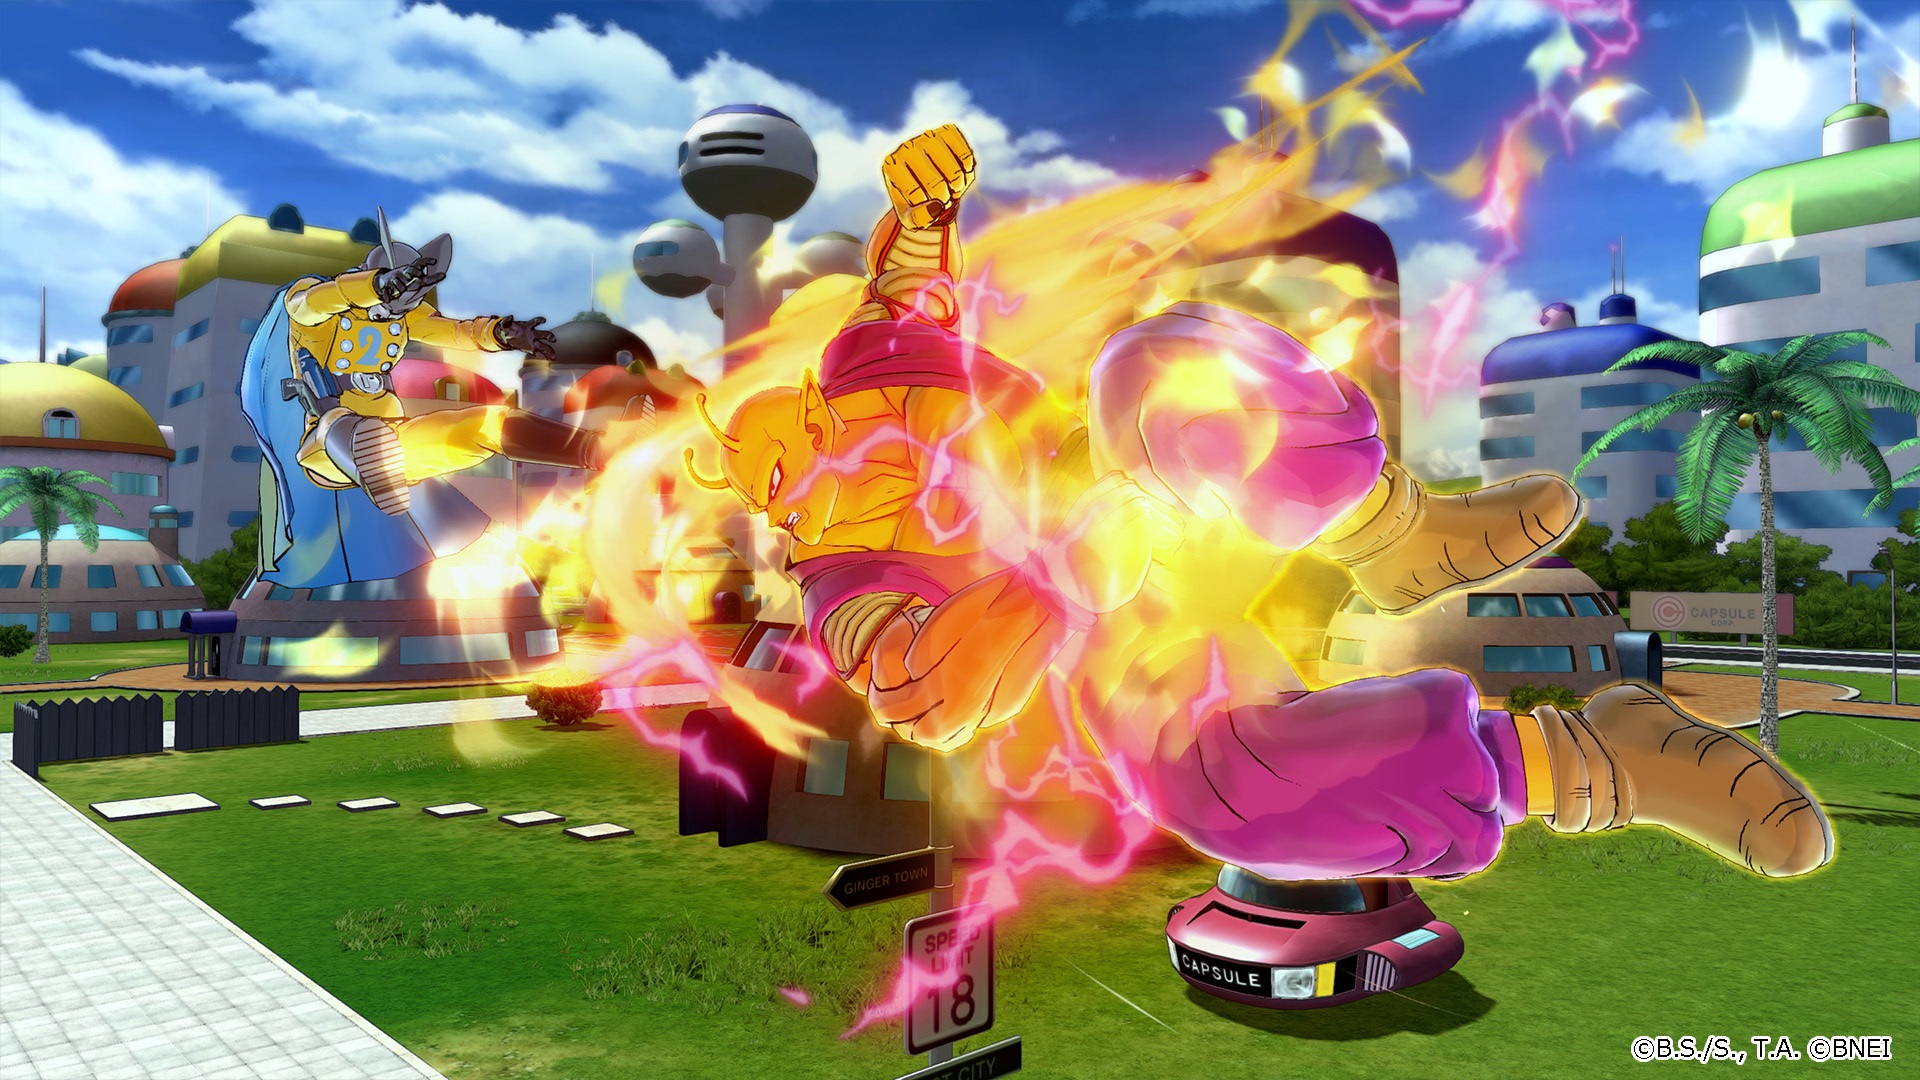 Dragon Ball Xenoverse 2 Free Update Trailer Teasing Orange Piccolo and New  Raid Boss - QooApp News